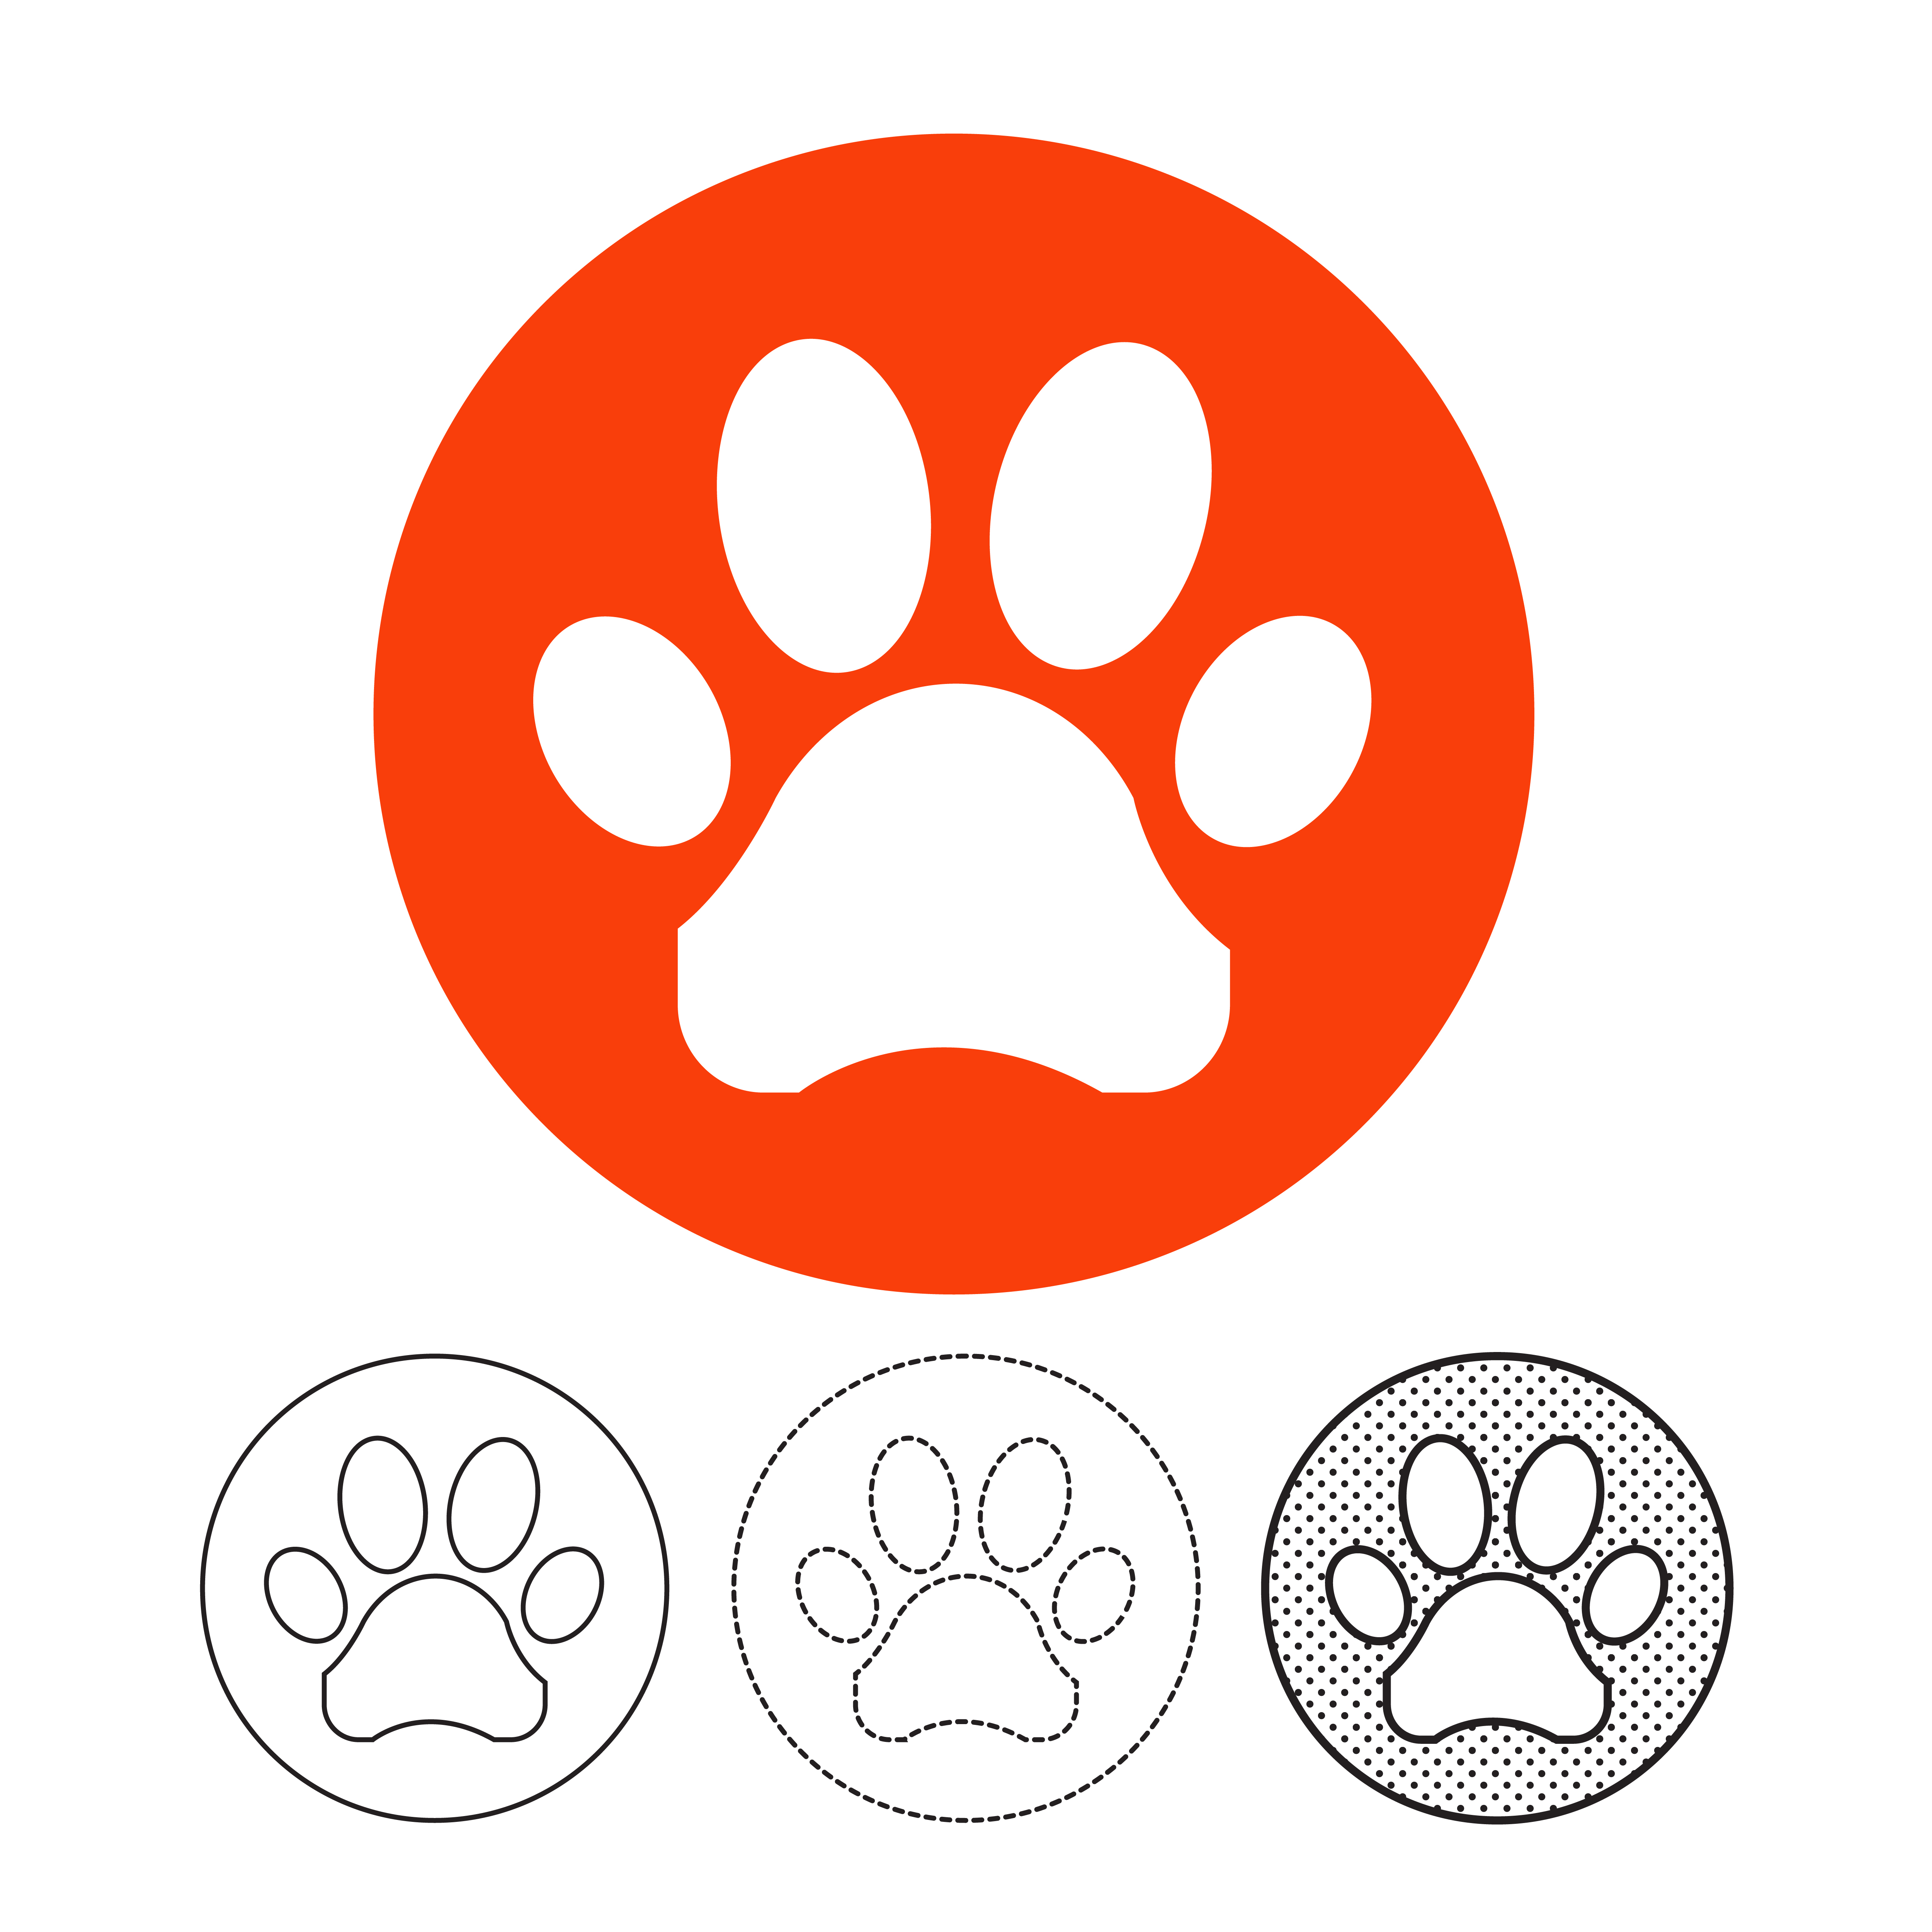 Download Animal footprint Icon Vector 571870 - Download Free Vectors, Clipart Graphics & Vector Art